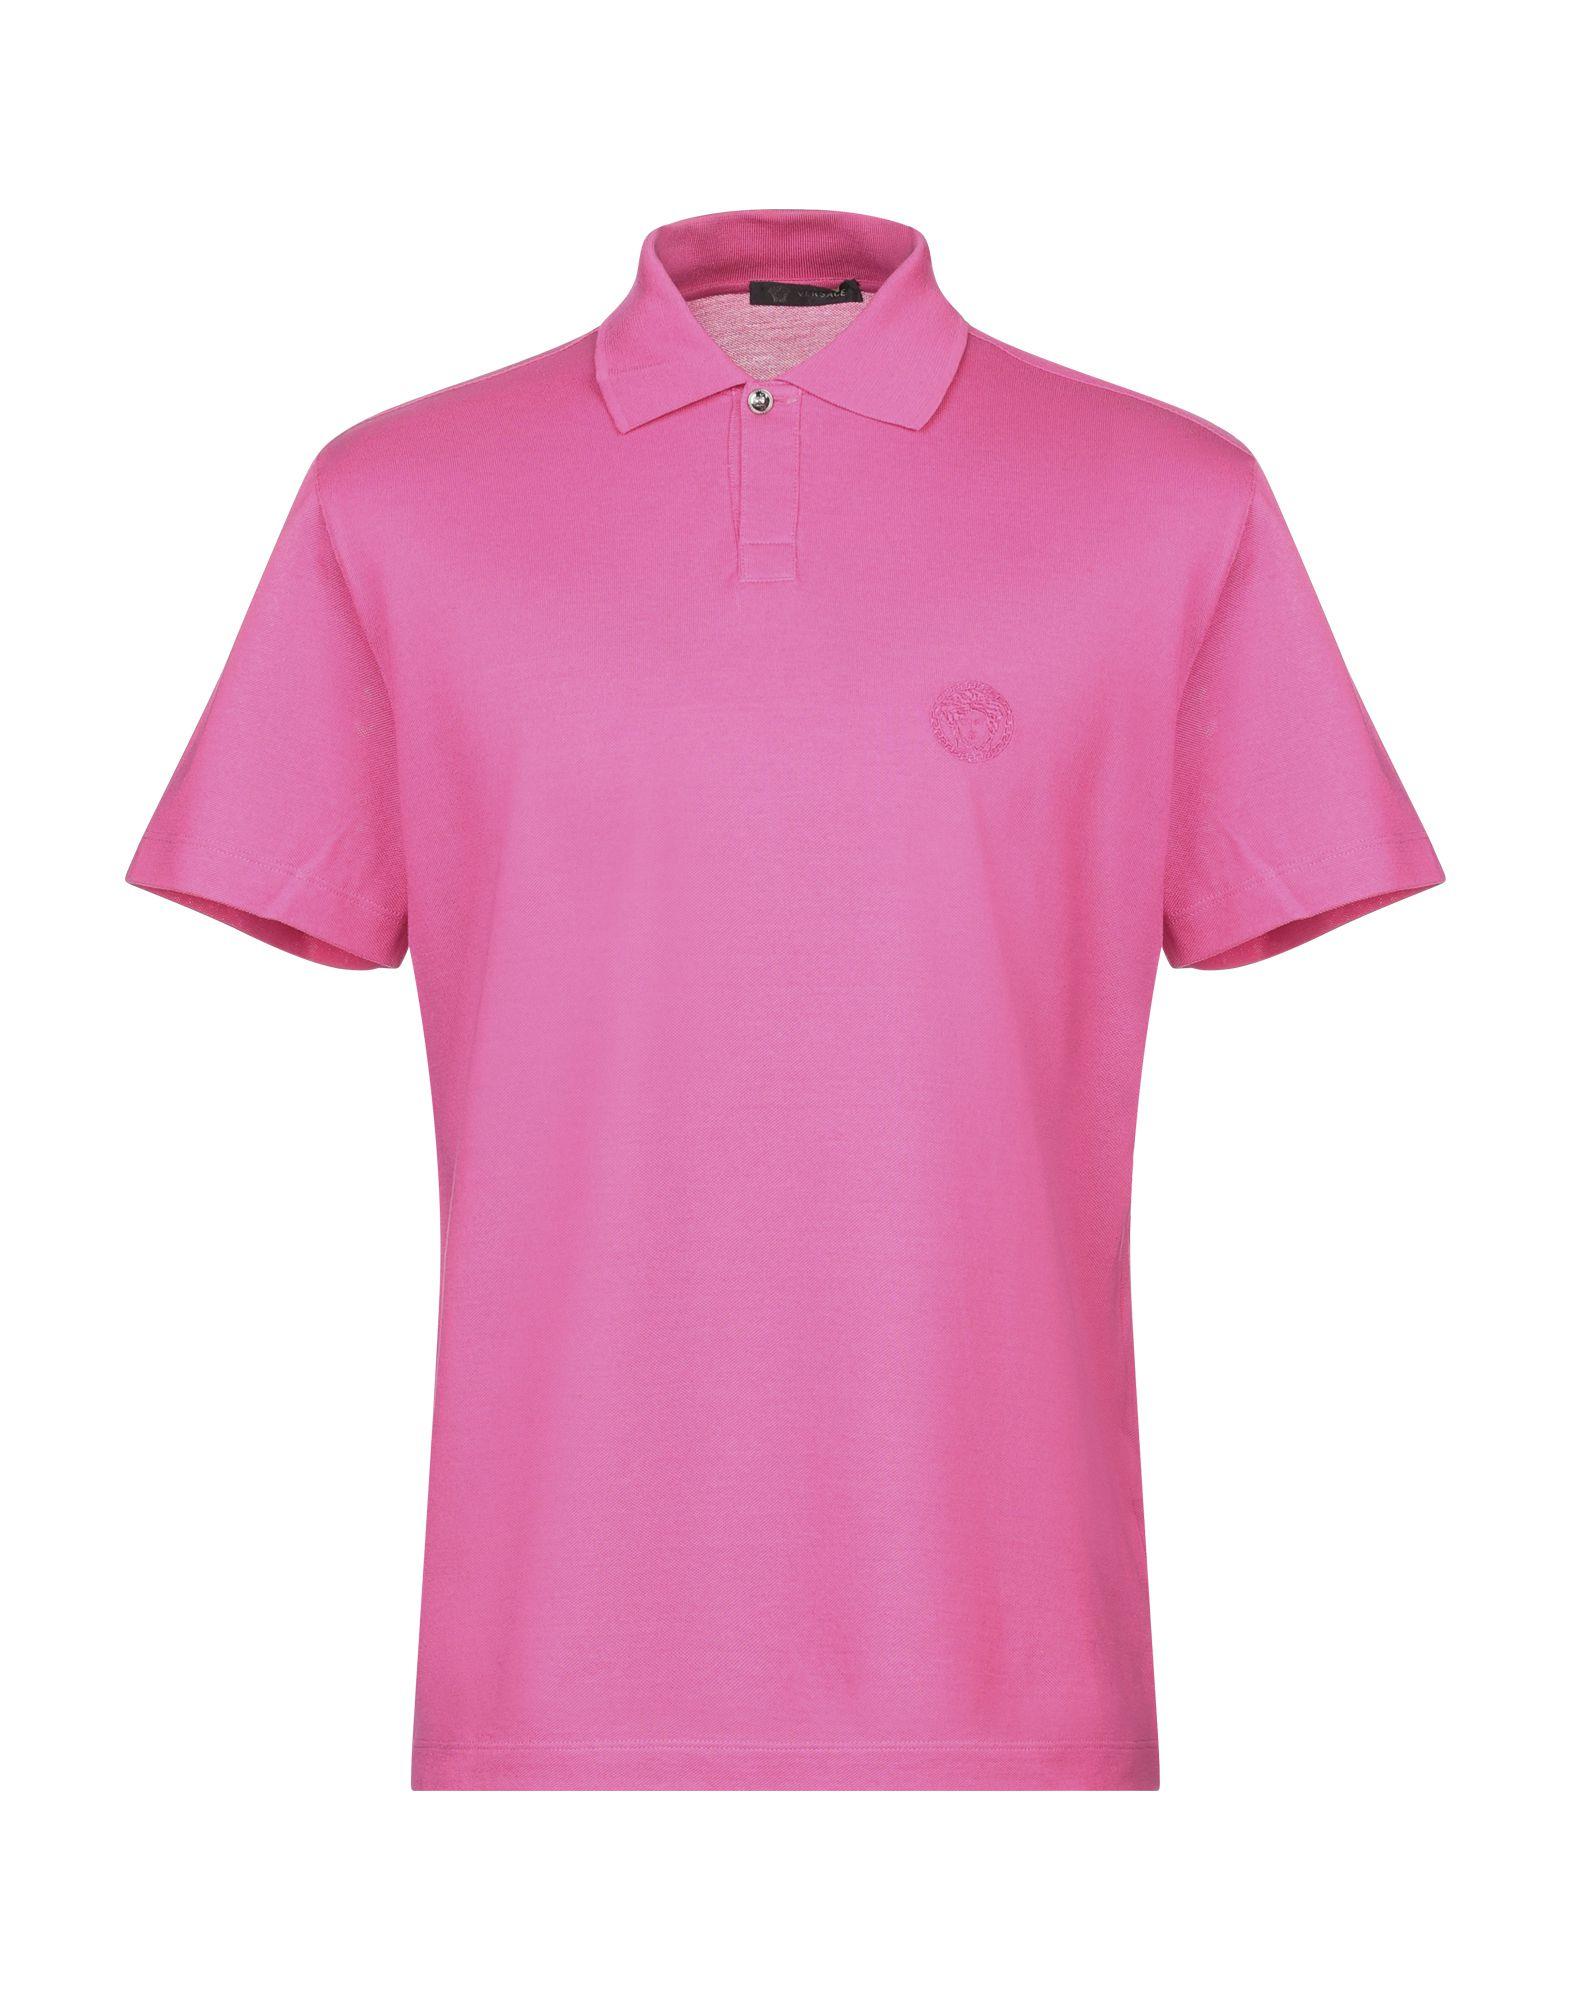 Versace Cotton Polo Shirt in Fuchsia (Purple) for Men - Lyst